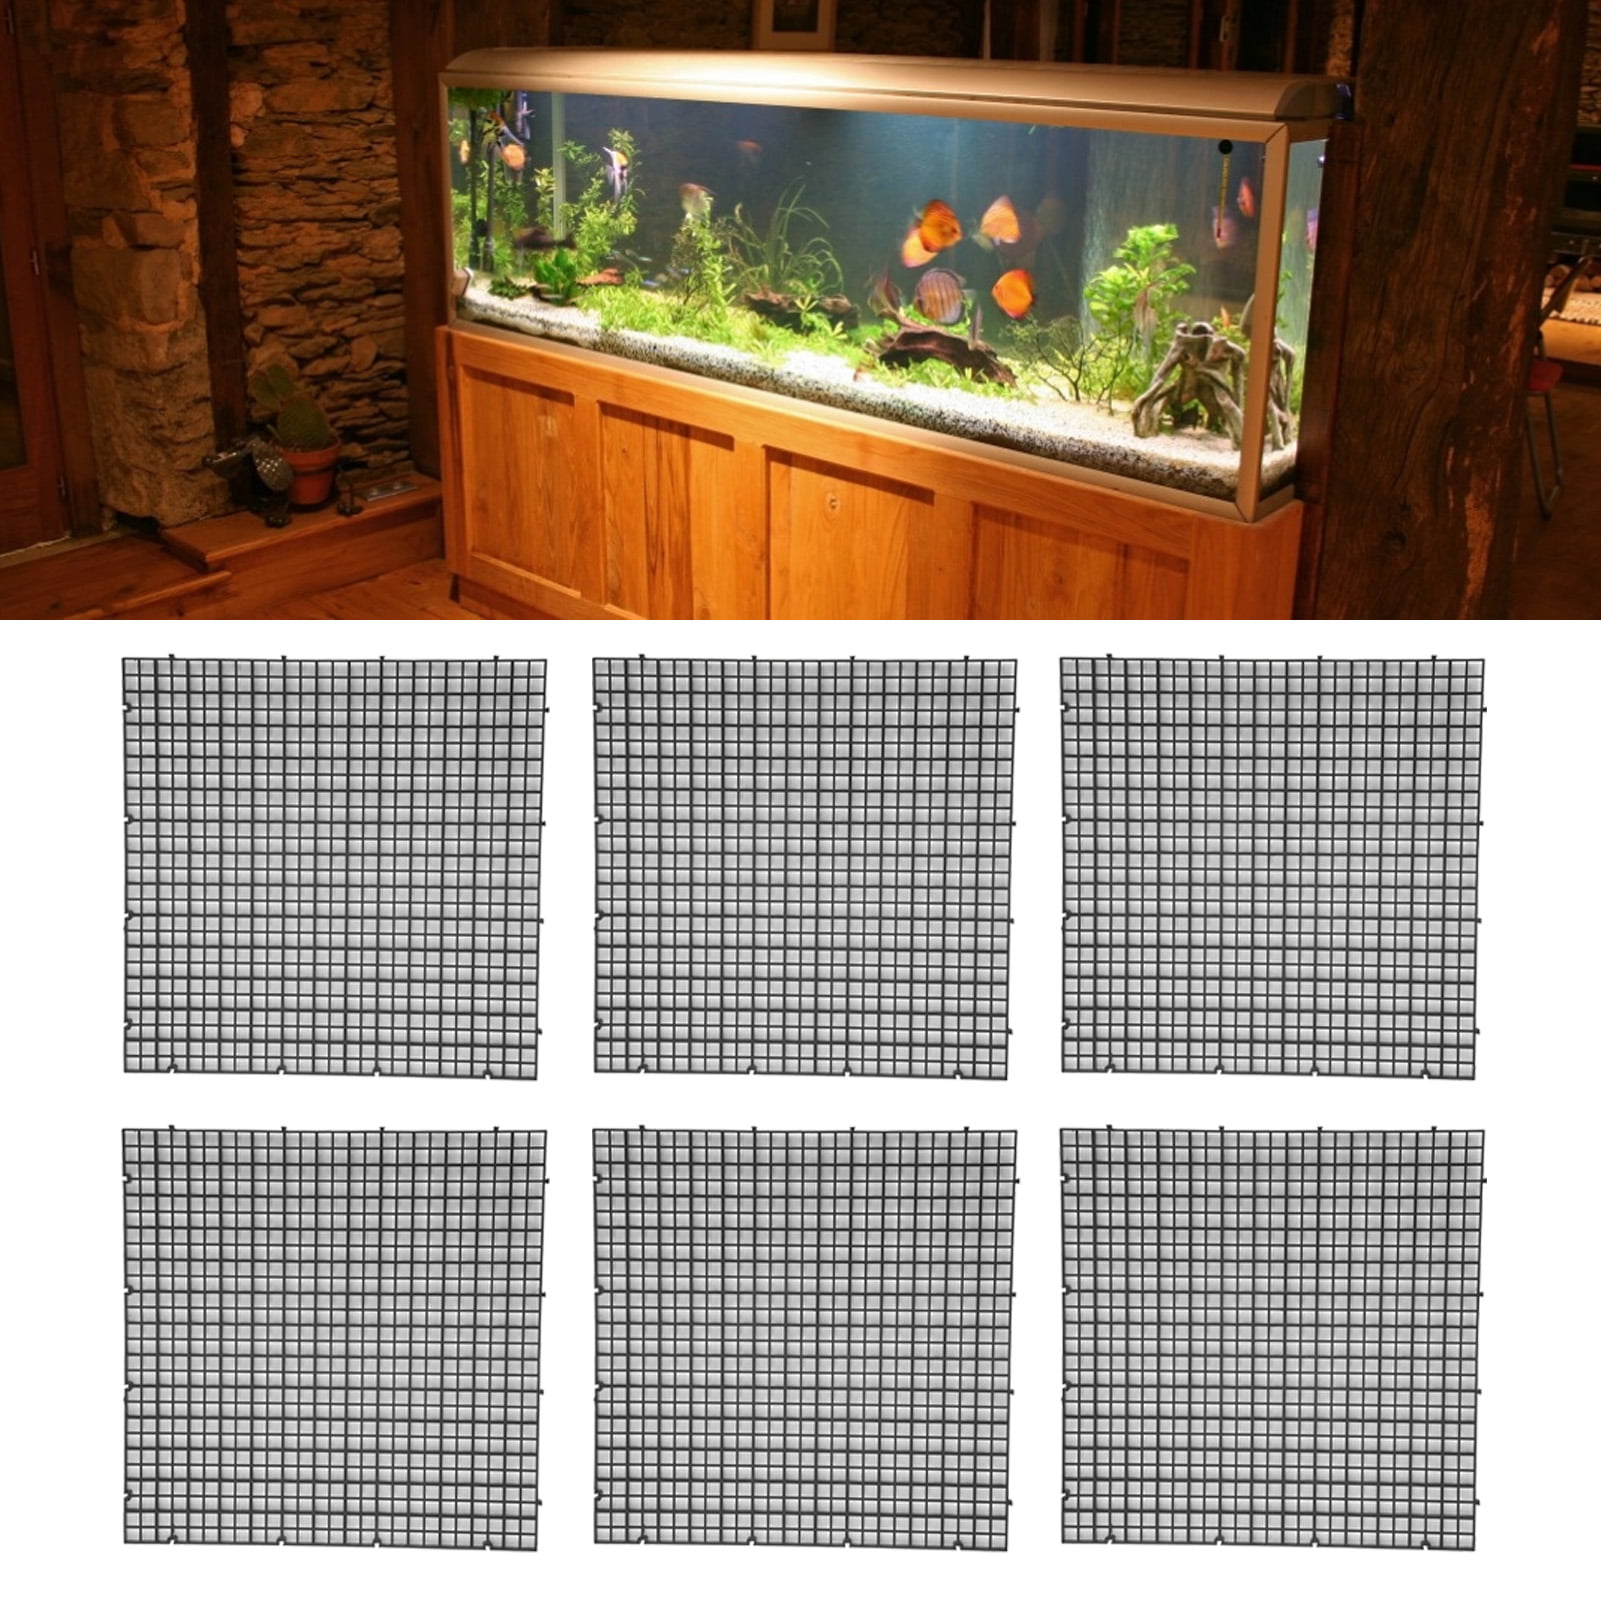 Exing Filtration Plate Aquarium Fish Tank Under Gravel Bottom Board Filter System White